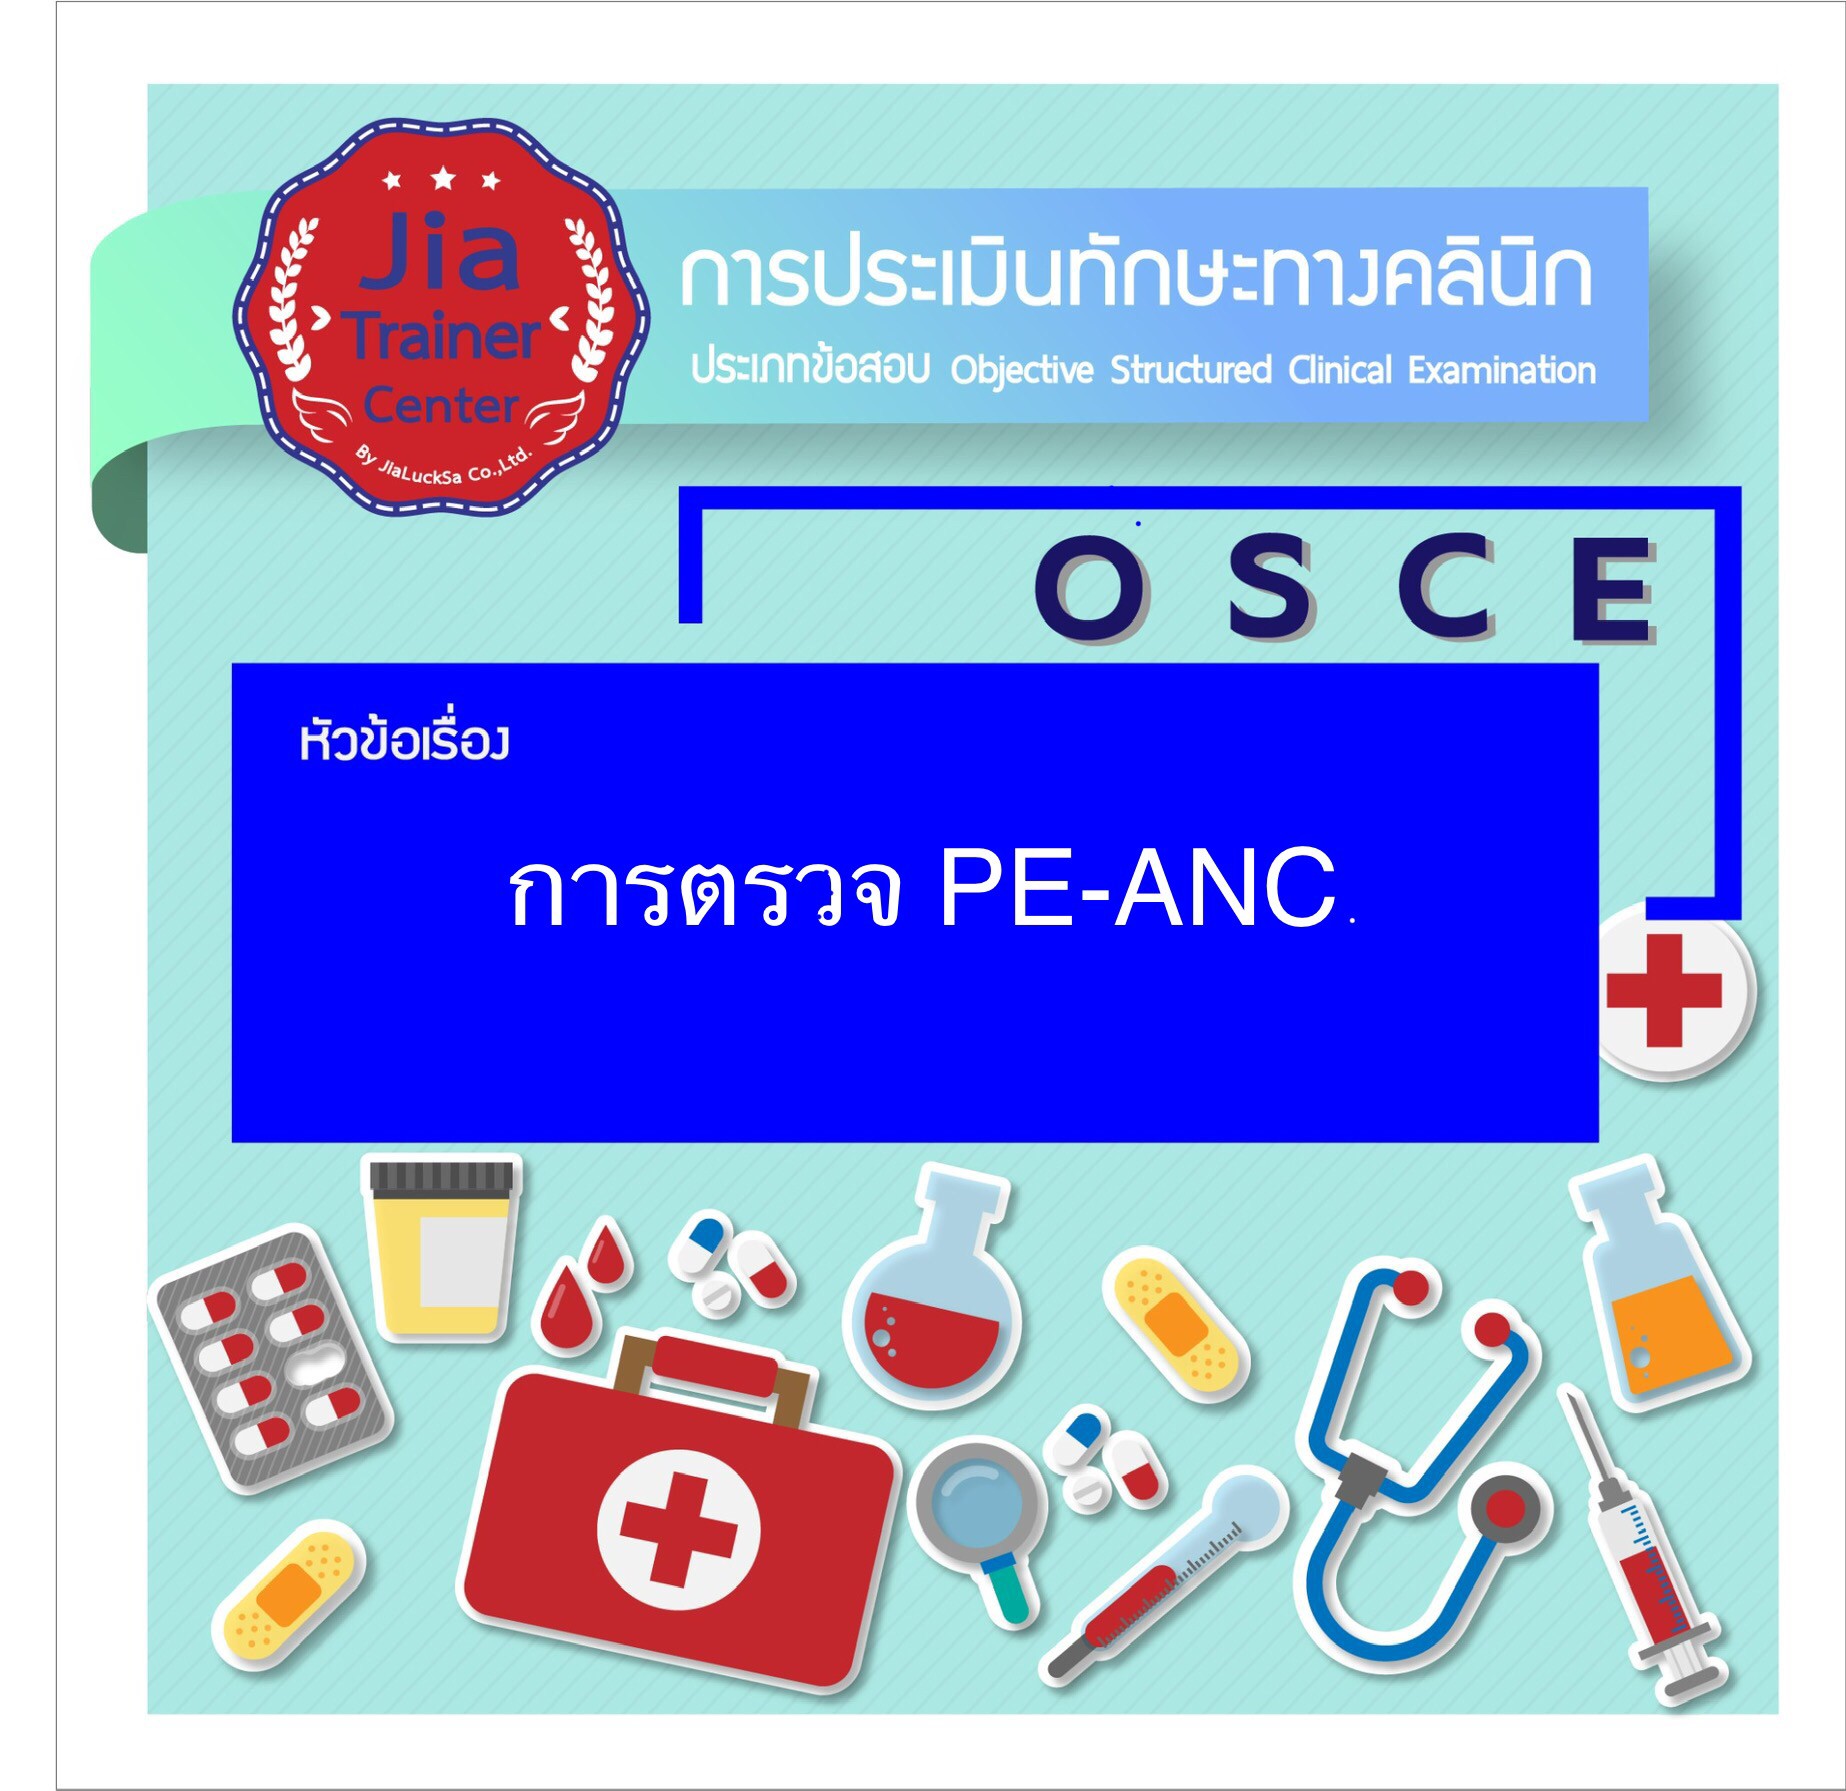 Osce-PE-ANC examination